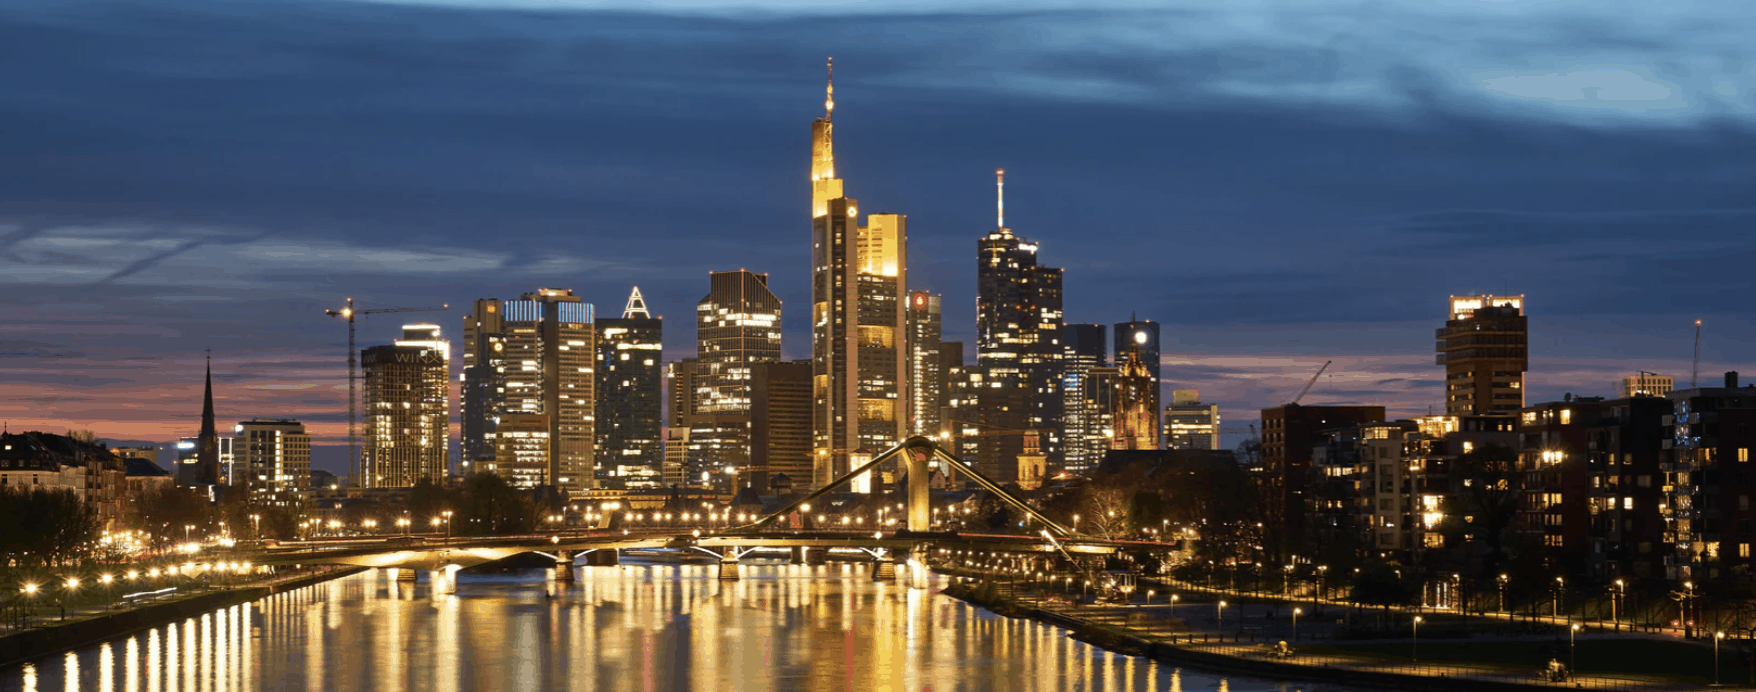 größte immobilienmakler frankfurt liste